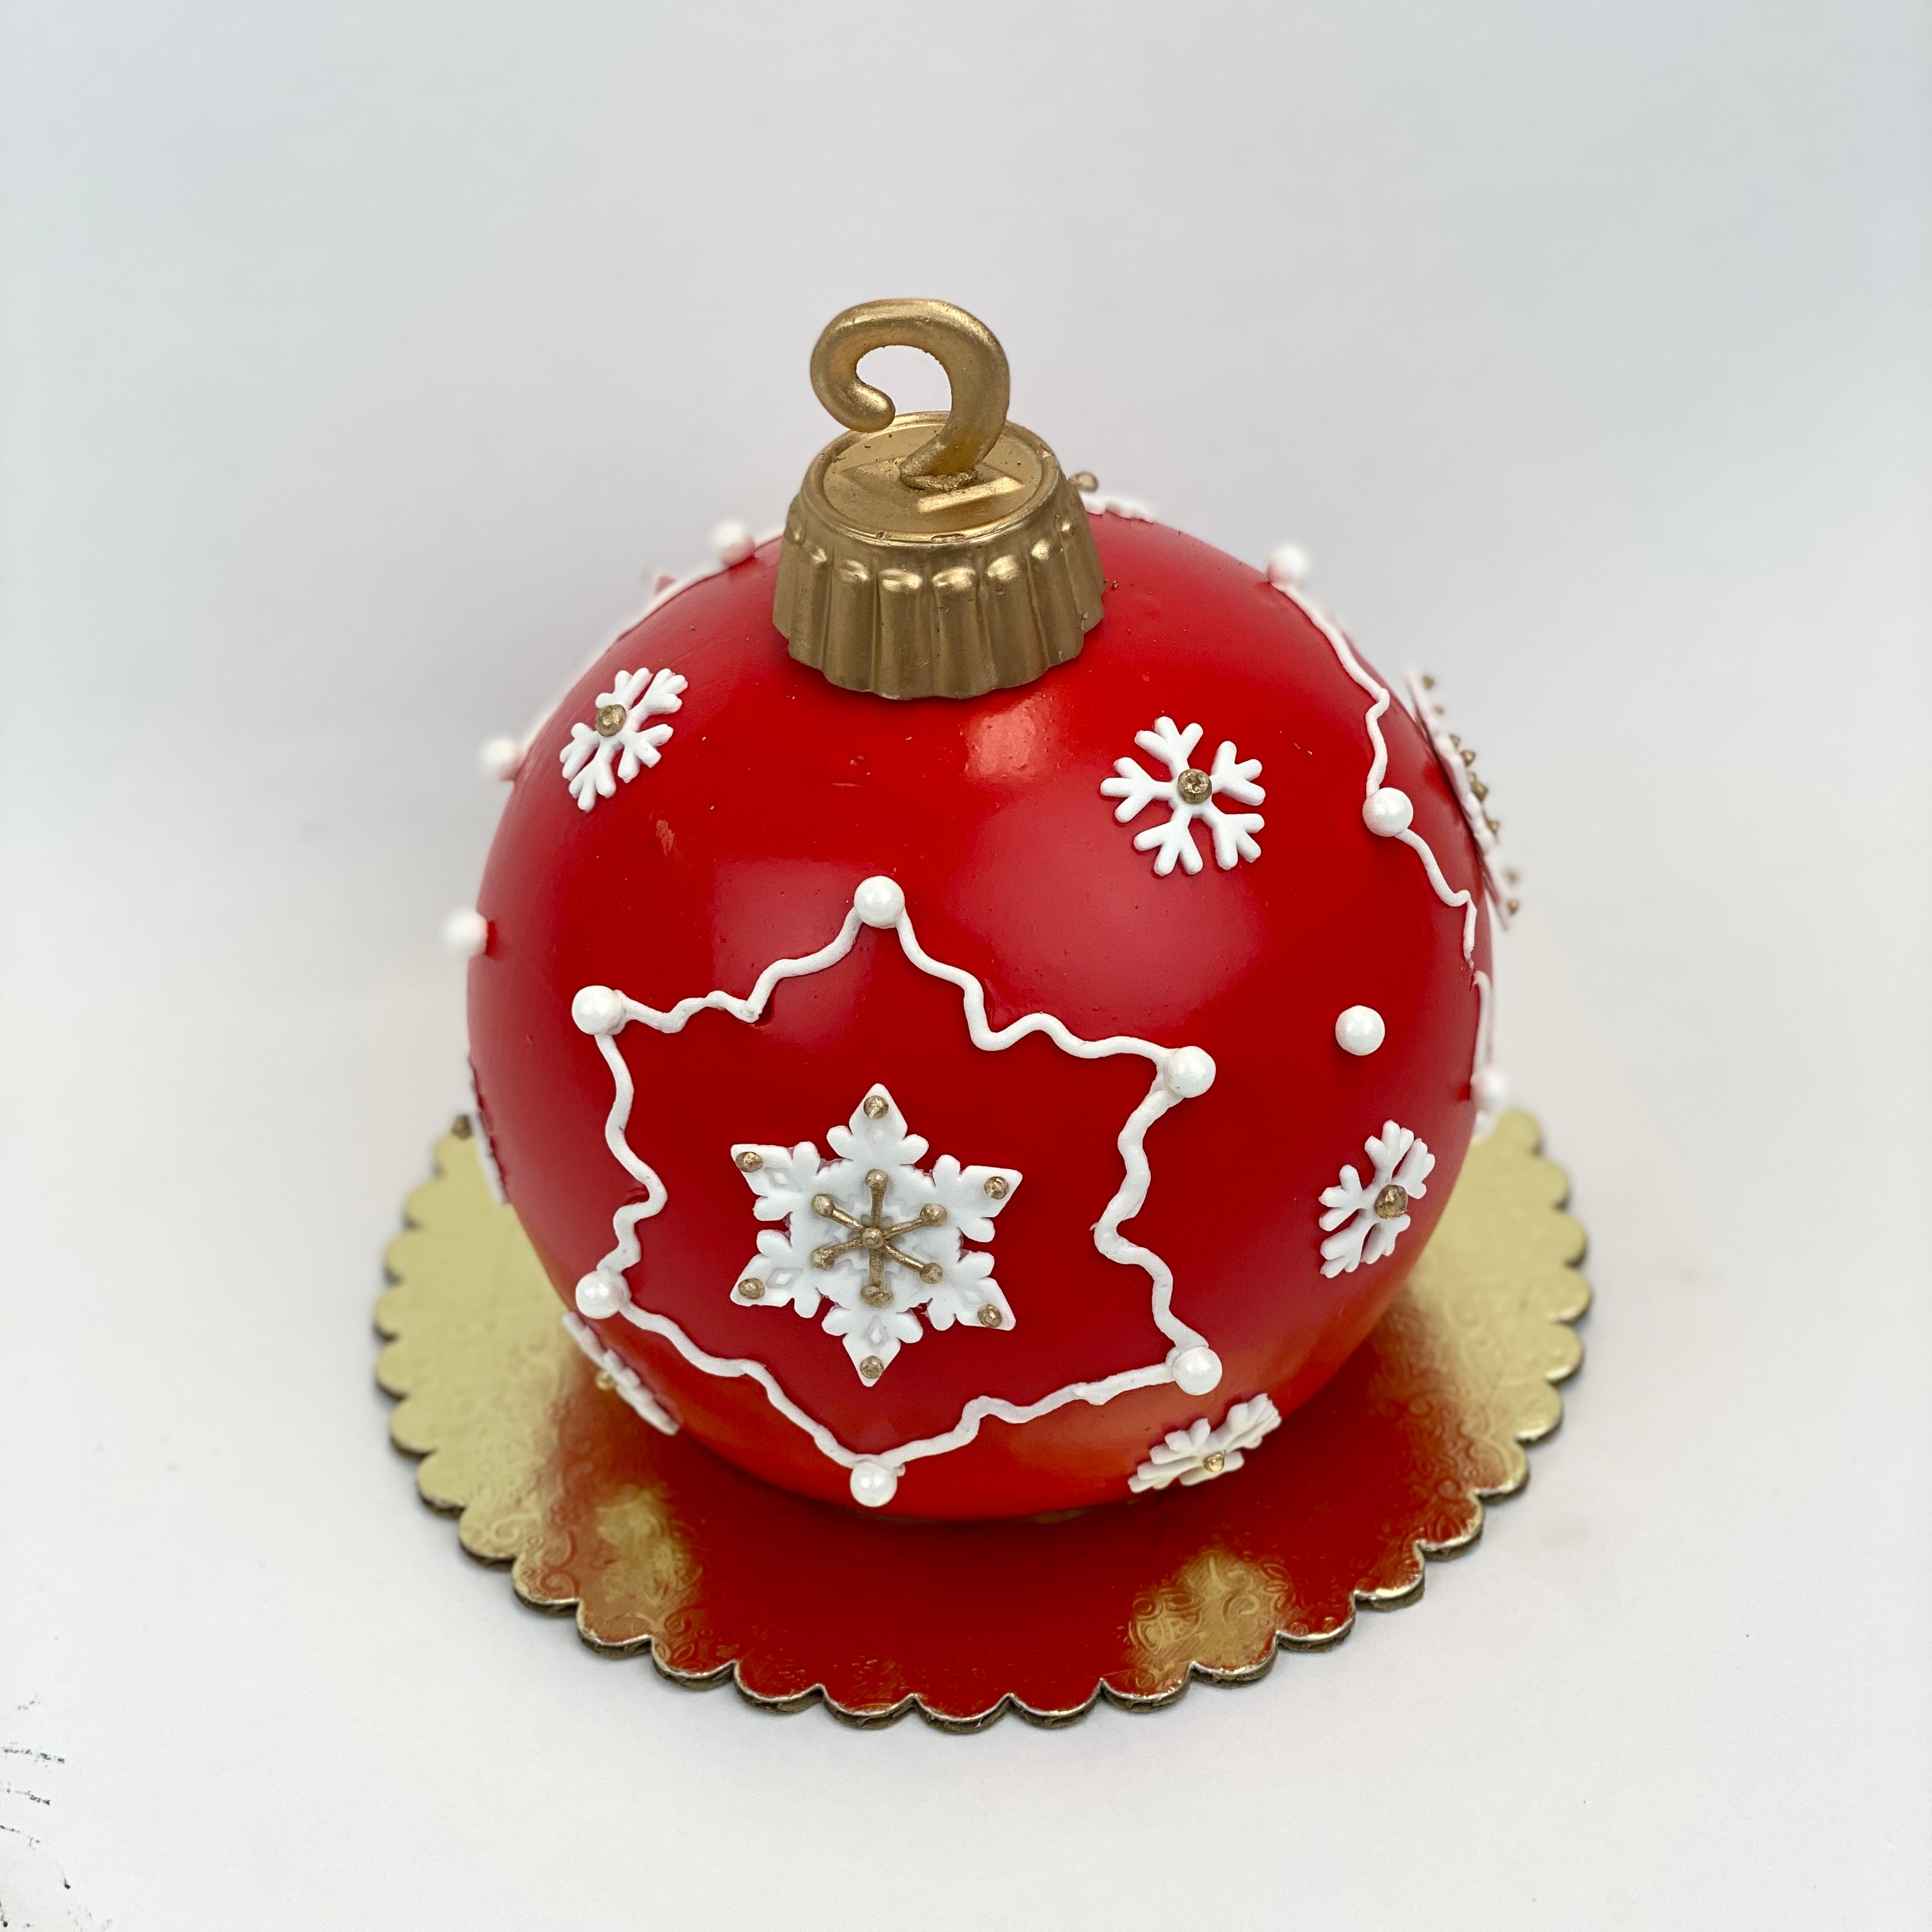 Red Christmas Ornament Cake